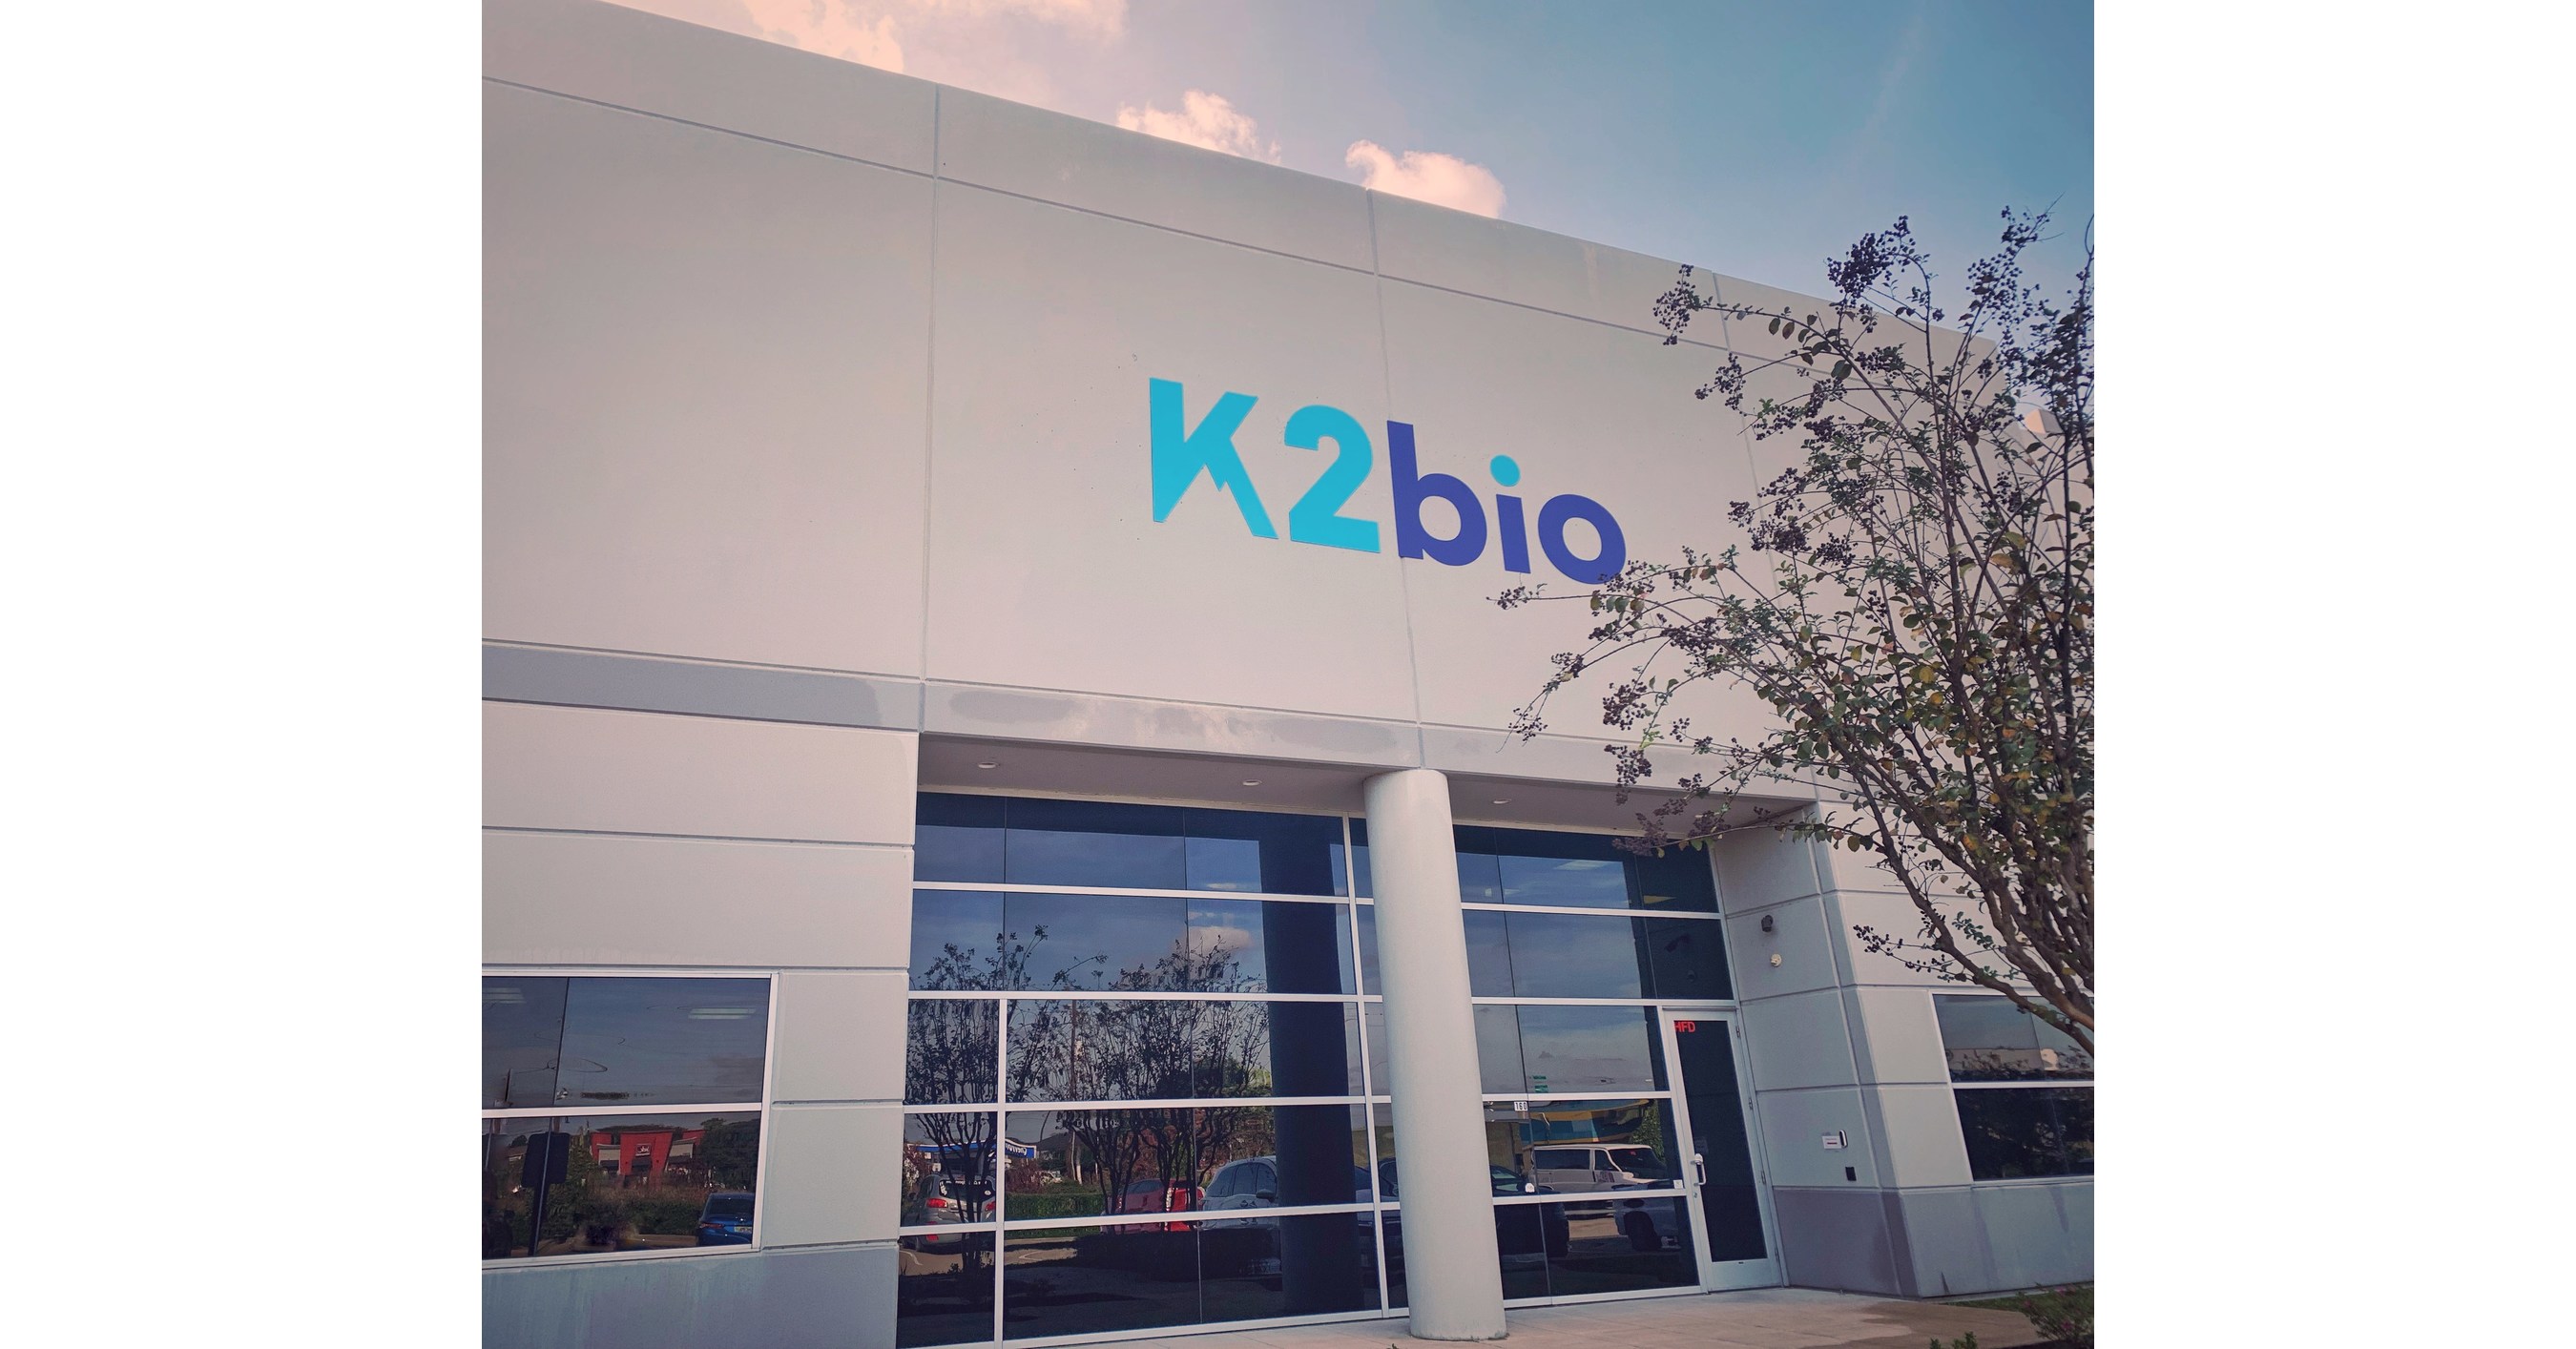 K2bio Ansun BioPharma Biotechnology research accelerator will